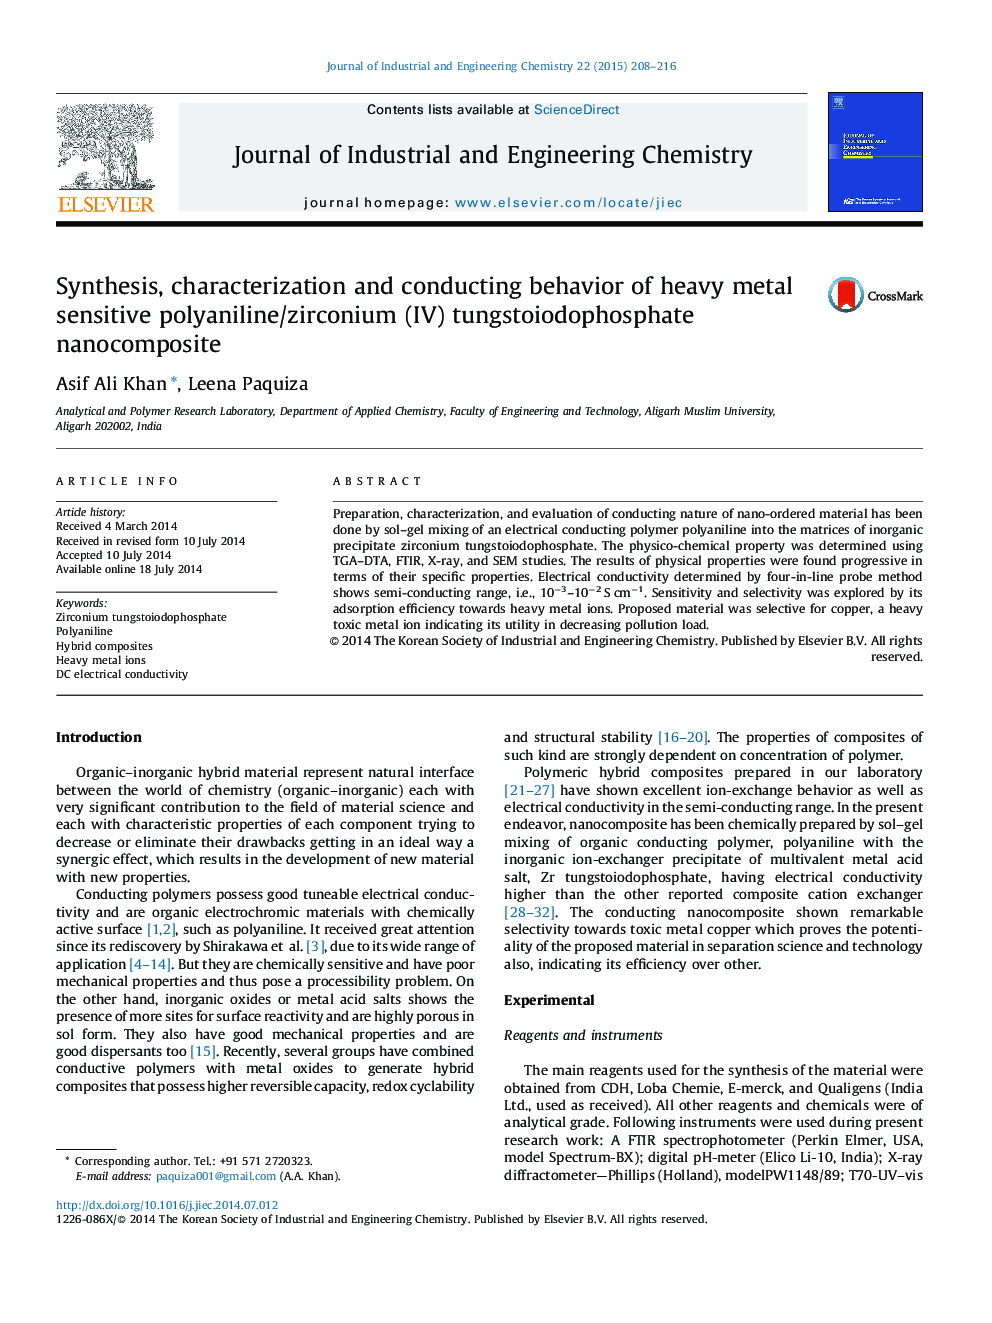 Synthesis, characterization and conducting behavior of heavy metal sensitive polyaniline/zirconium (IV) tungstoiodophosphate nanocomposite